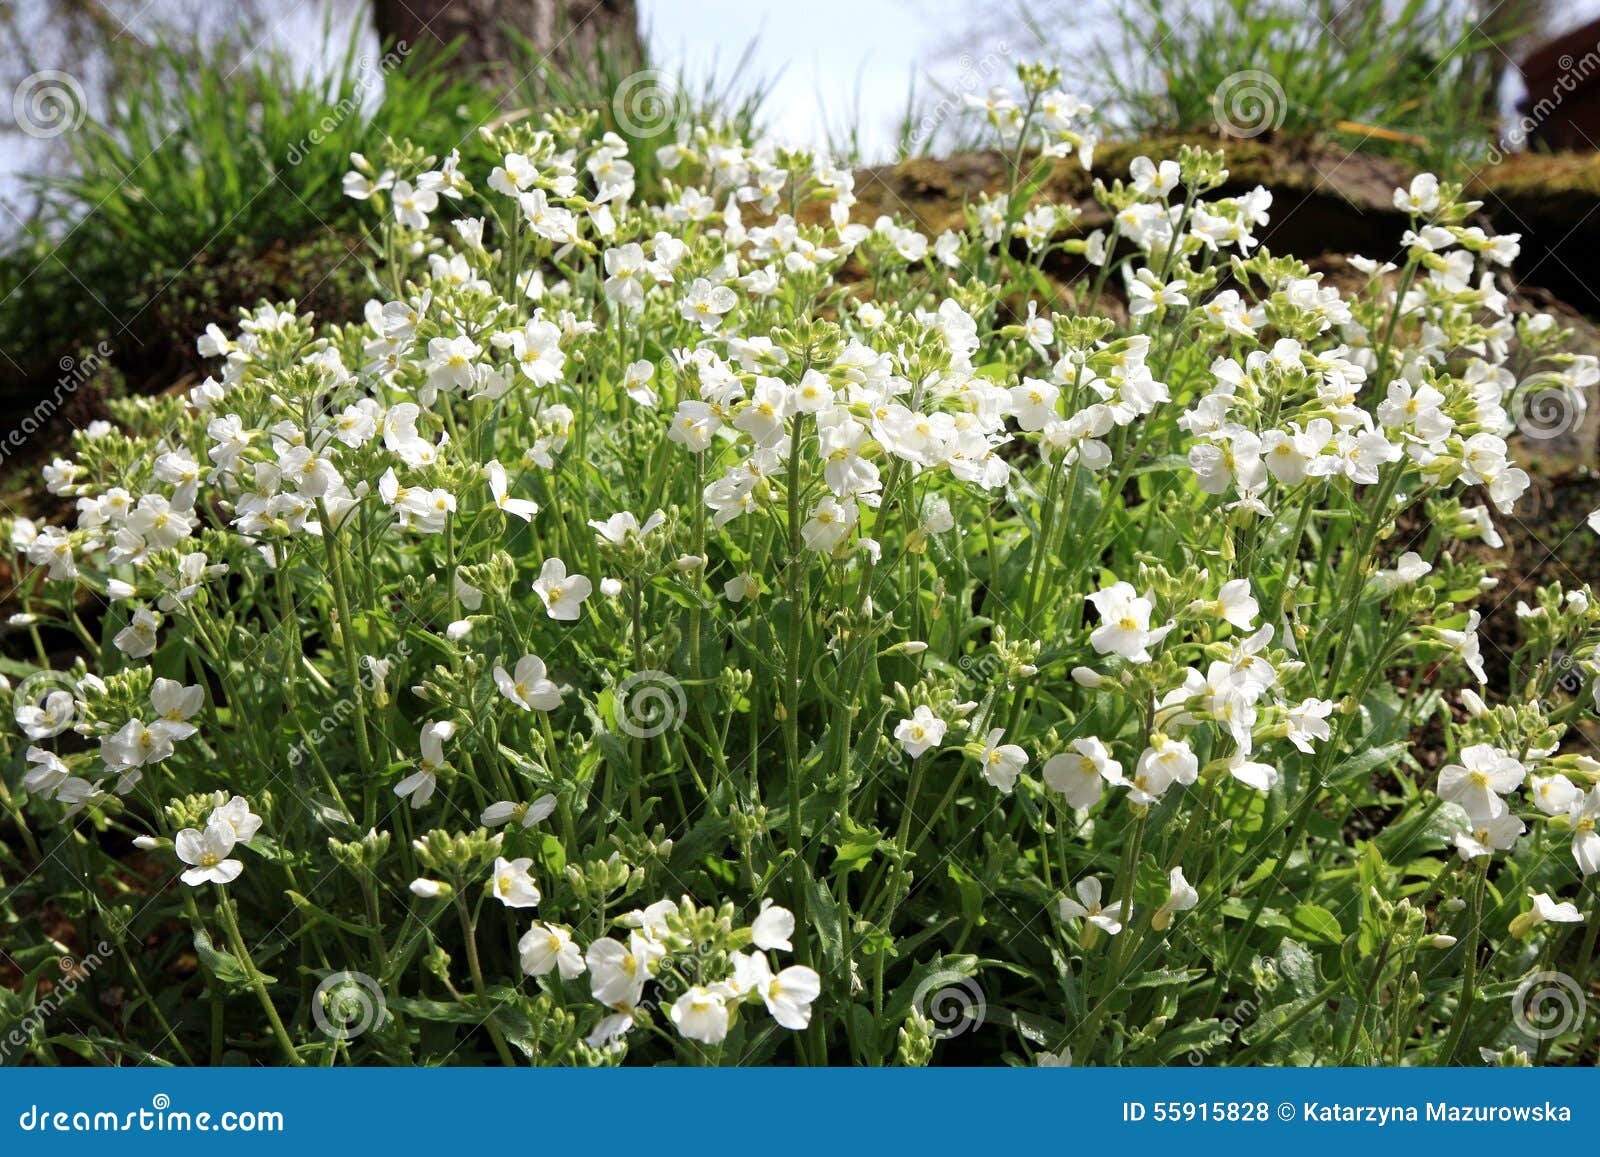 white arabis alpina